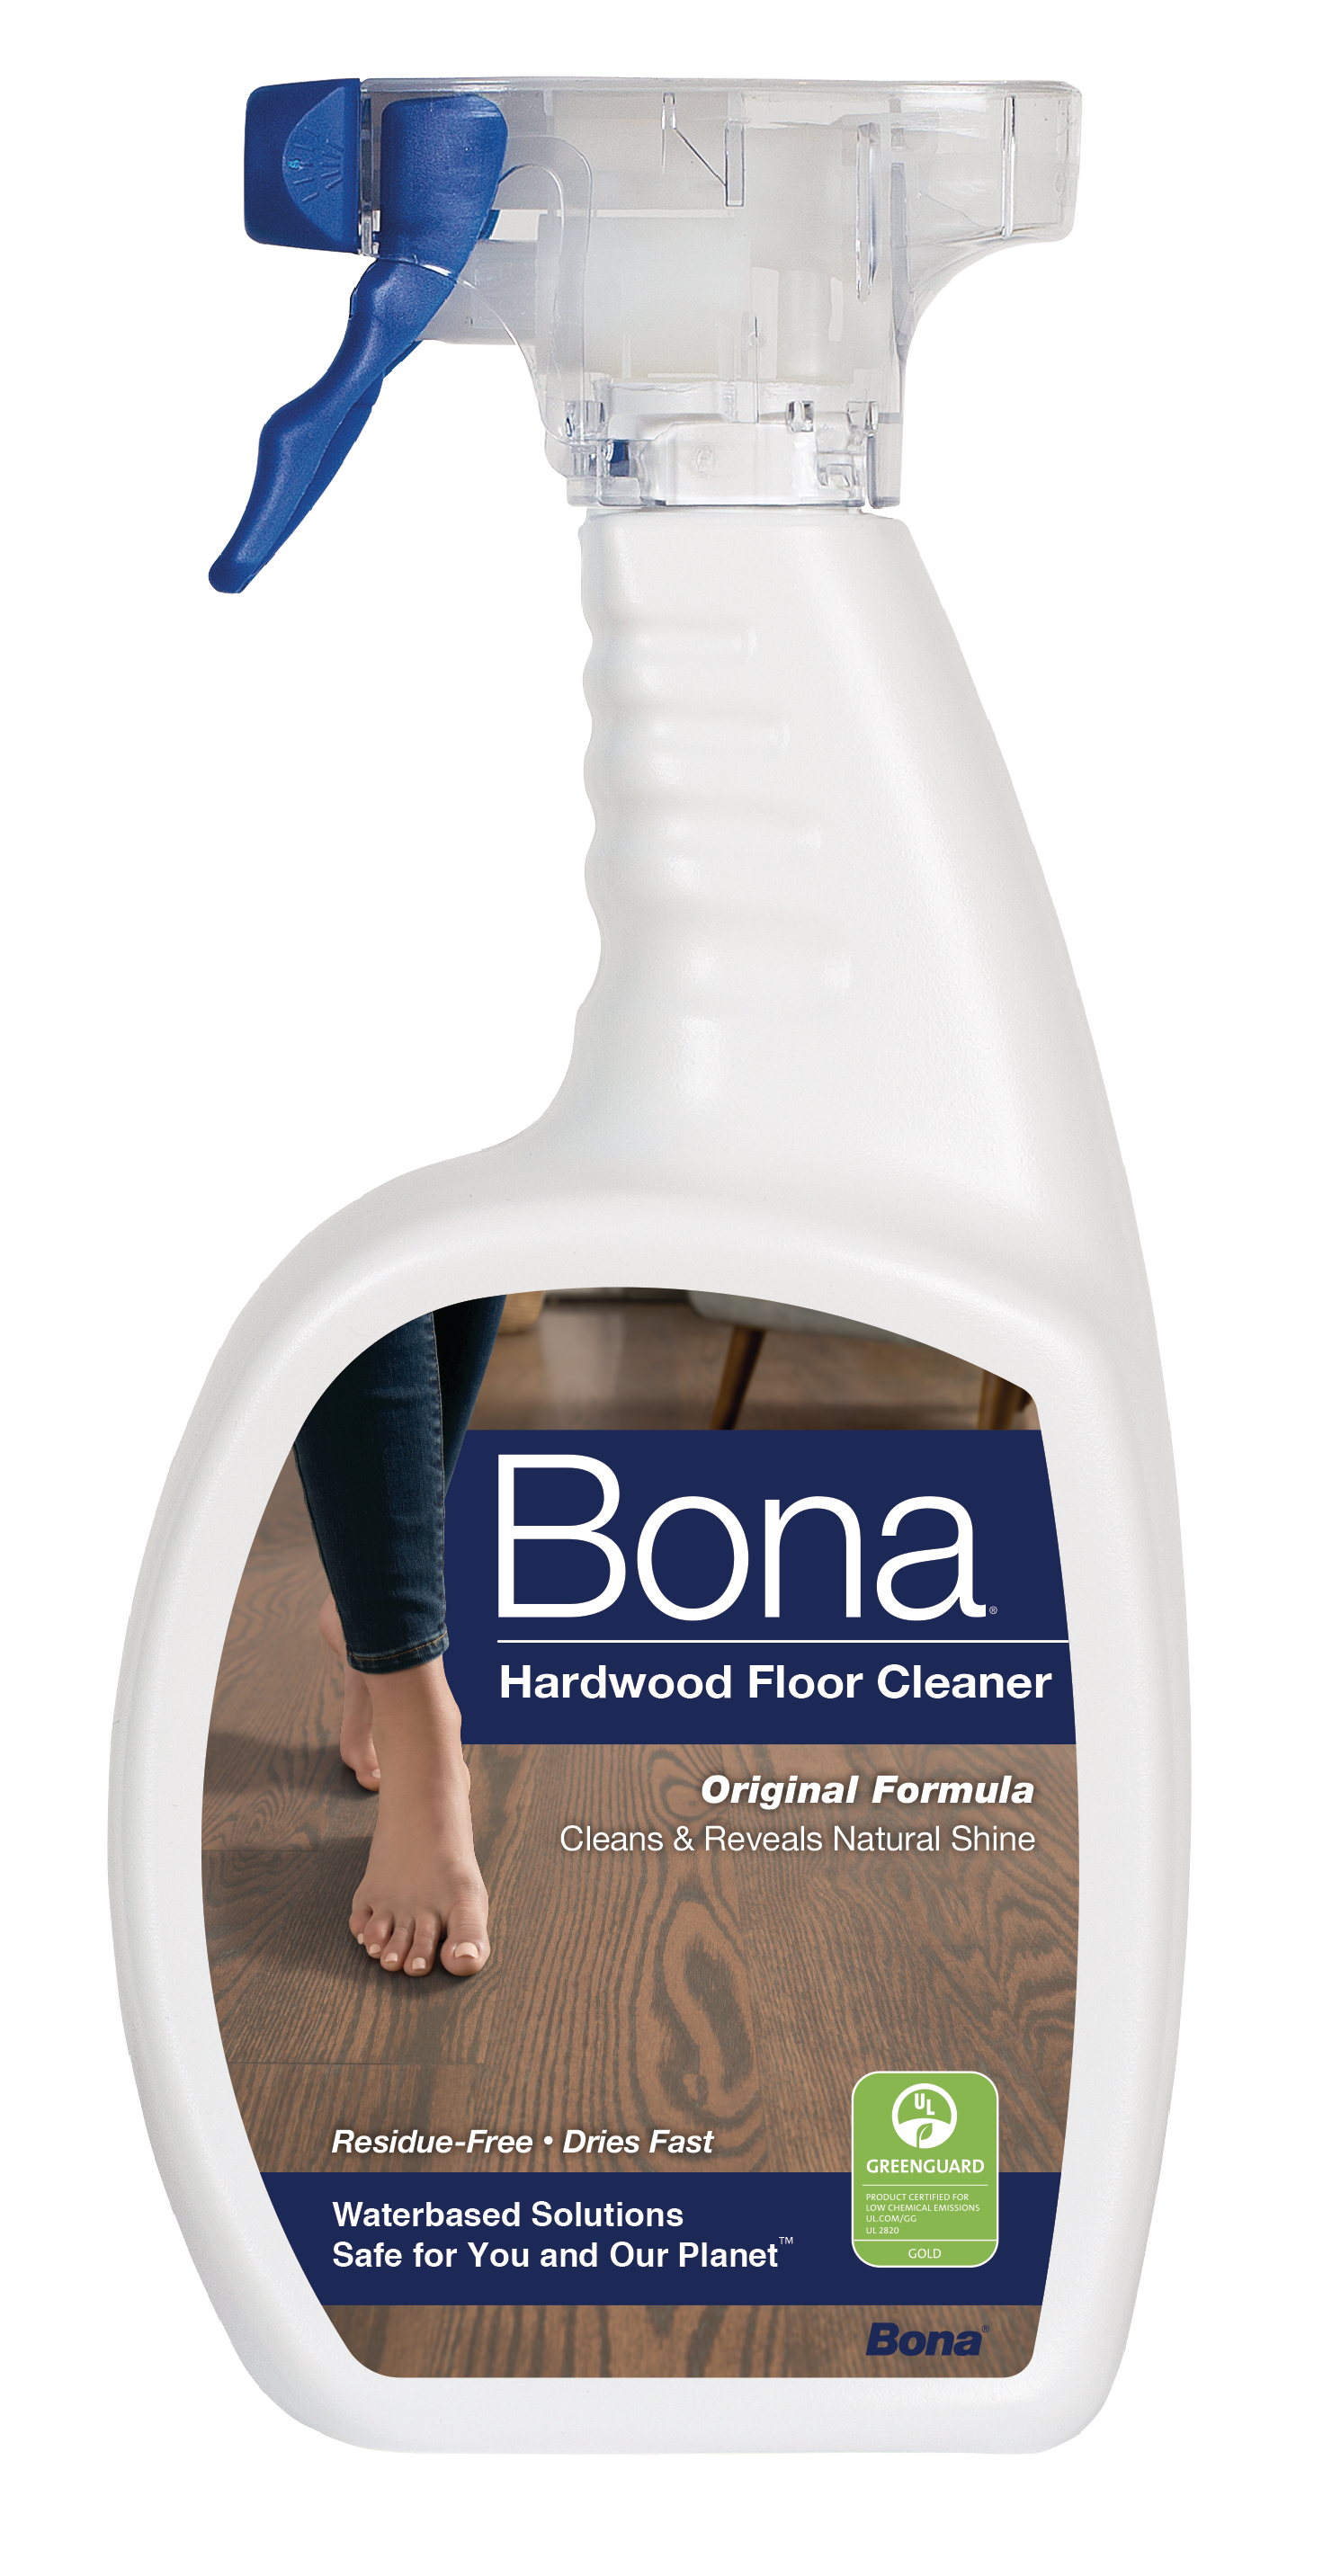 Bona Hardwood Floor Cleaner Us, How To Clean Brand New Hardwood Floors